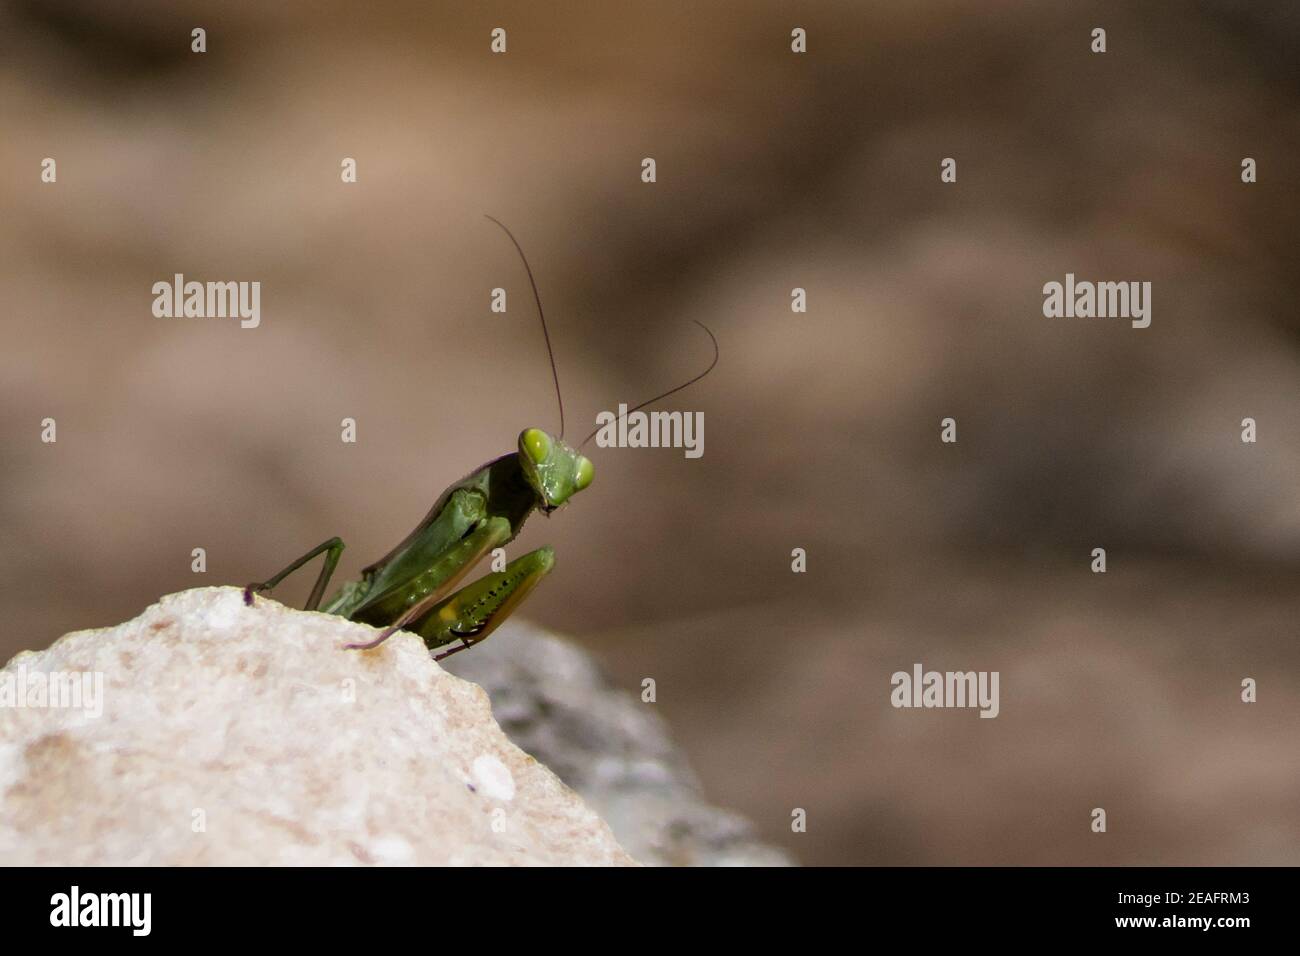 Mantis close shot Stock Photo